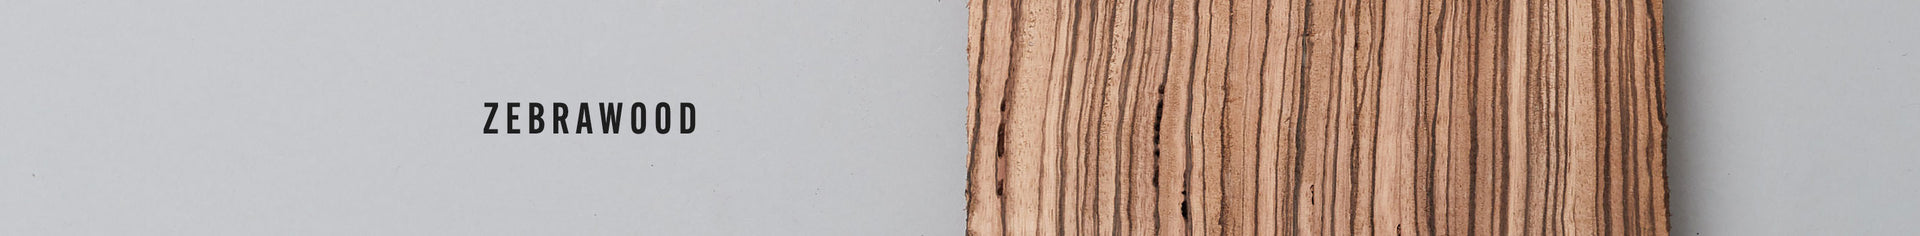 Wood Type Zebrawood